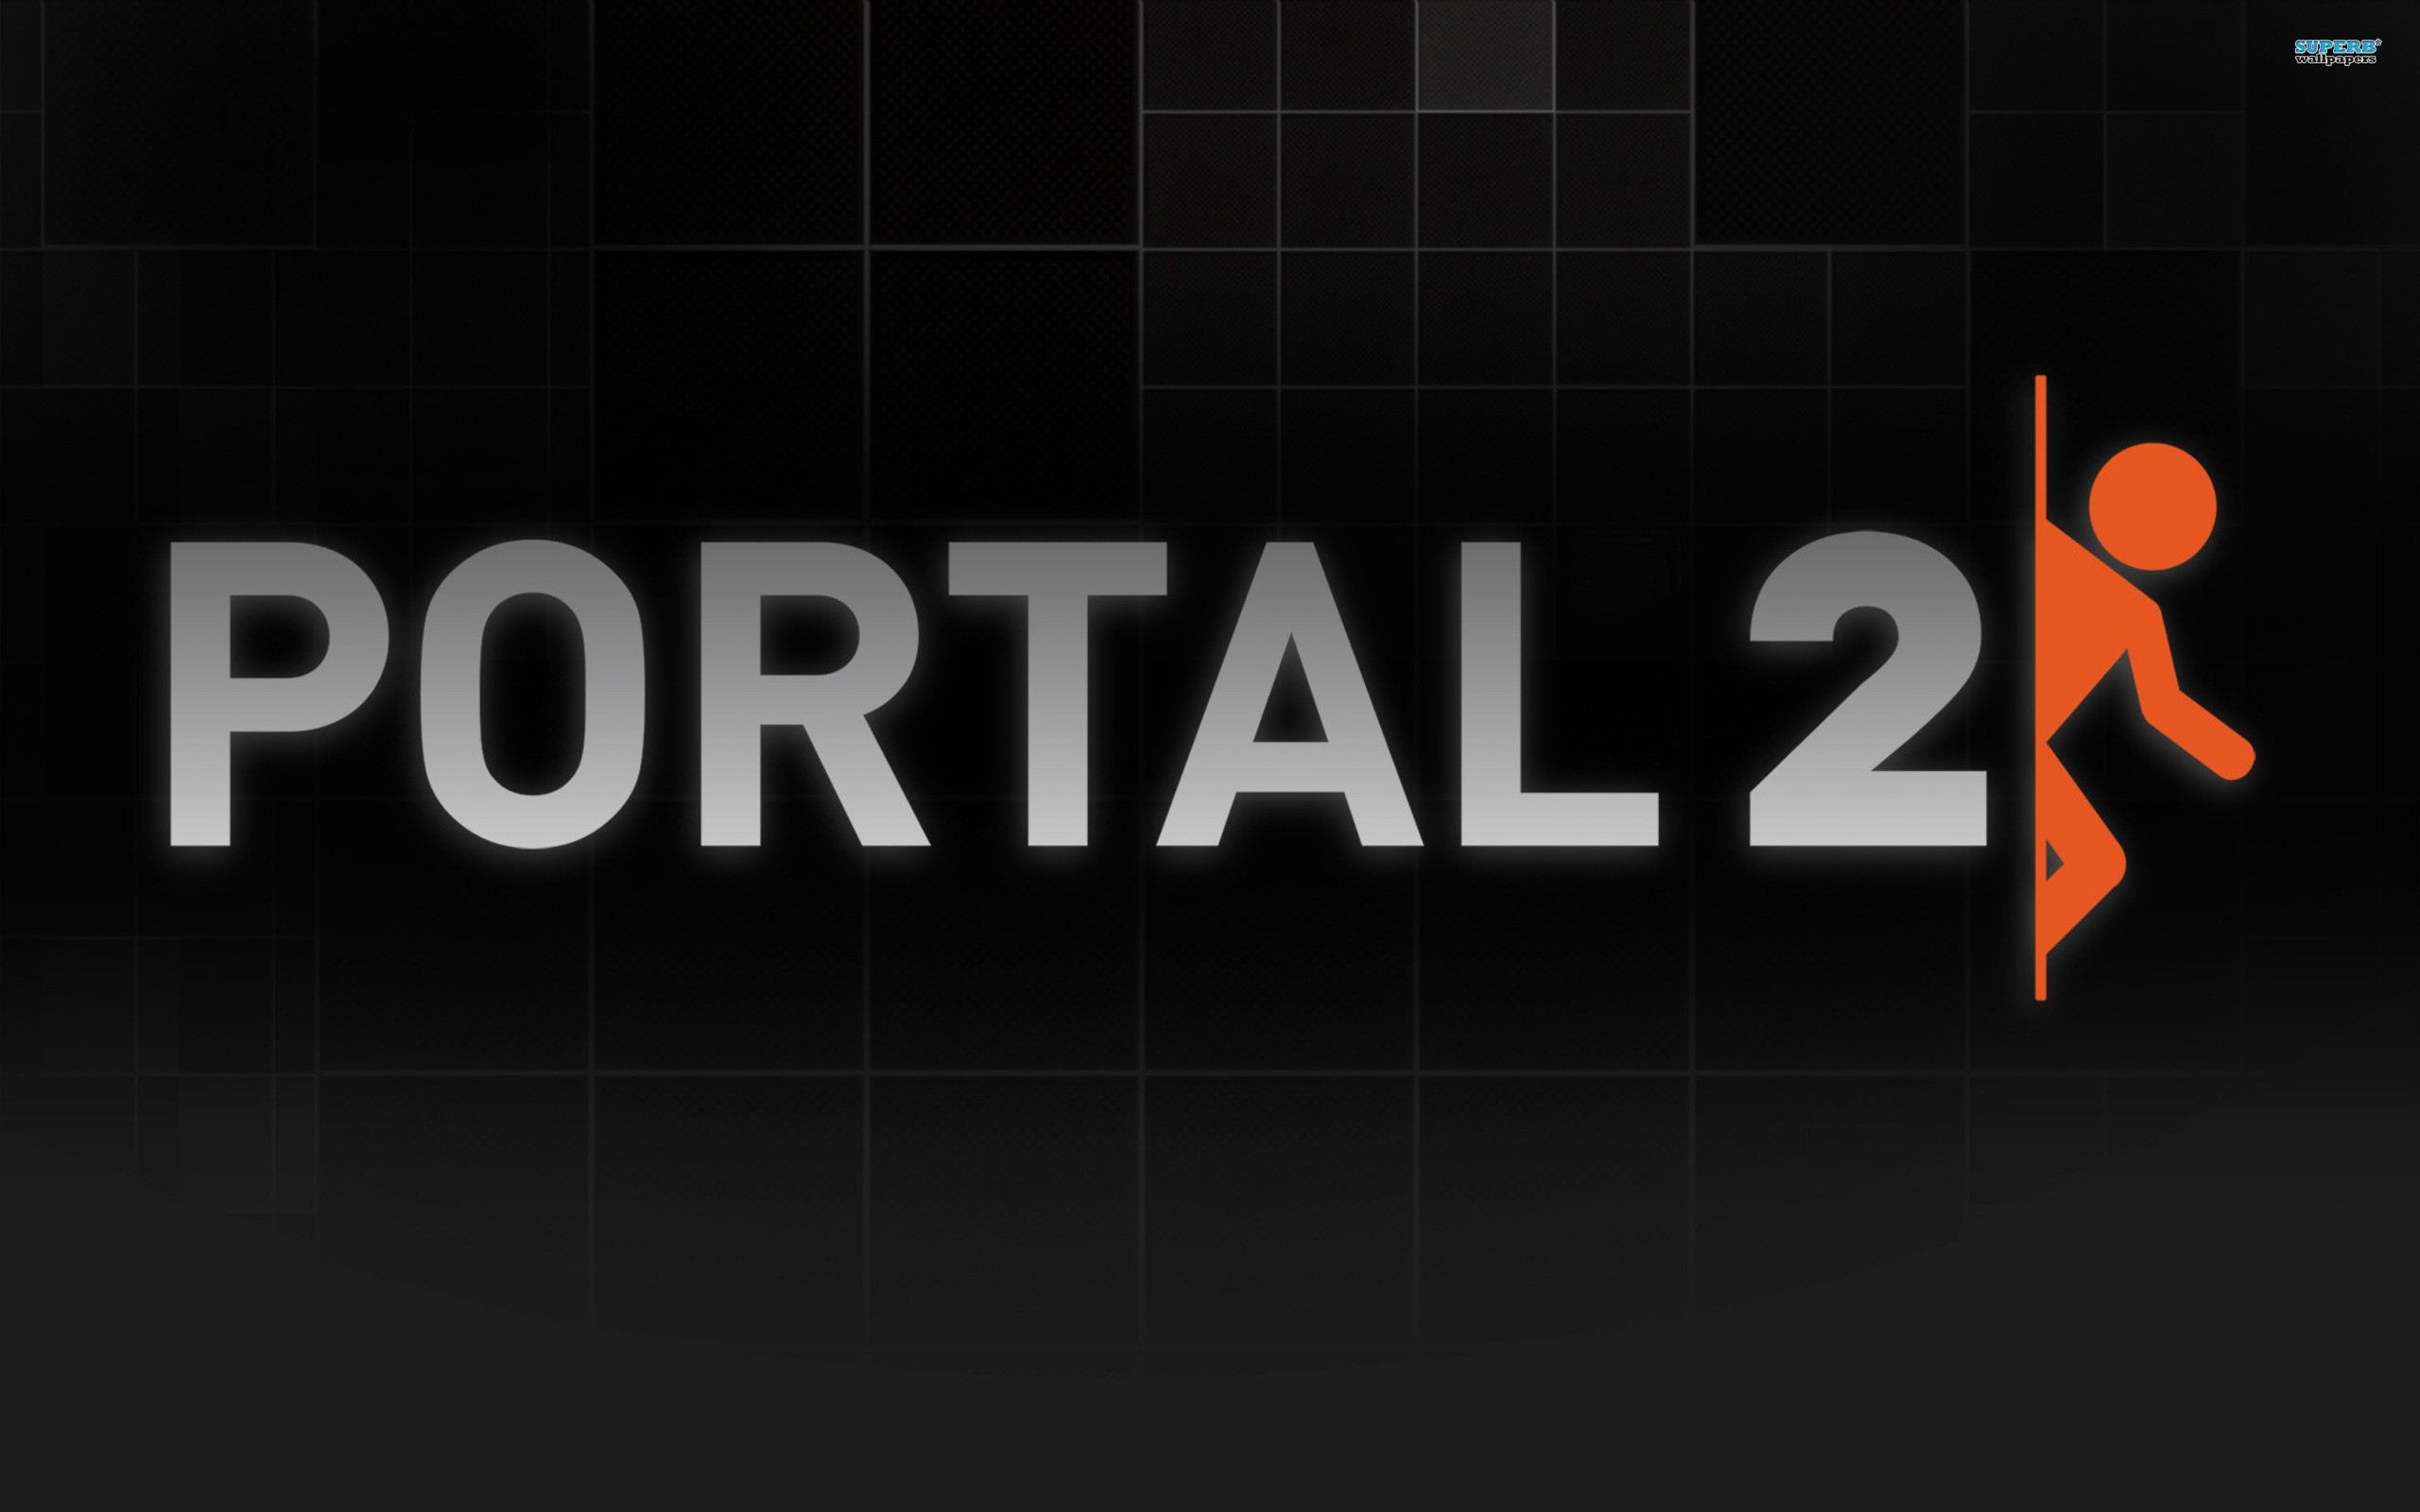 General 2560x1600 video games artwork Portal (game) PC gaming video game art